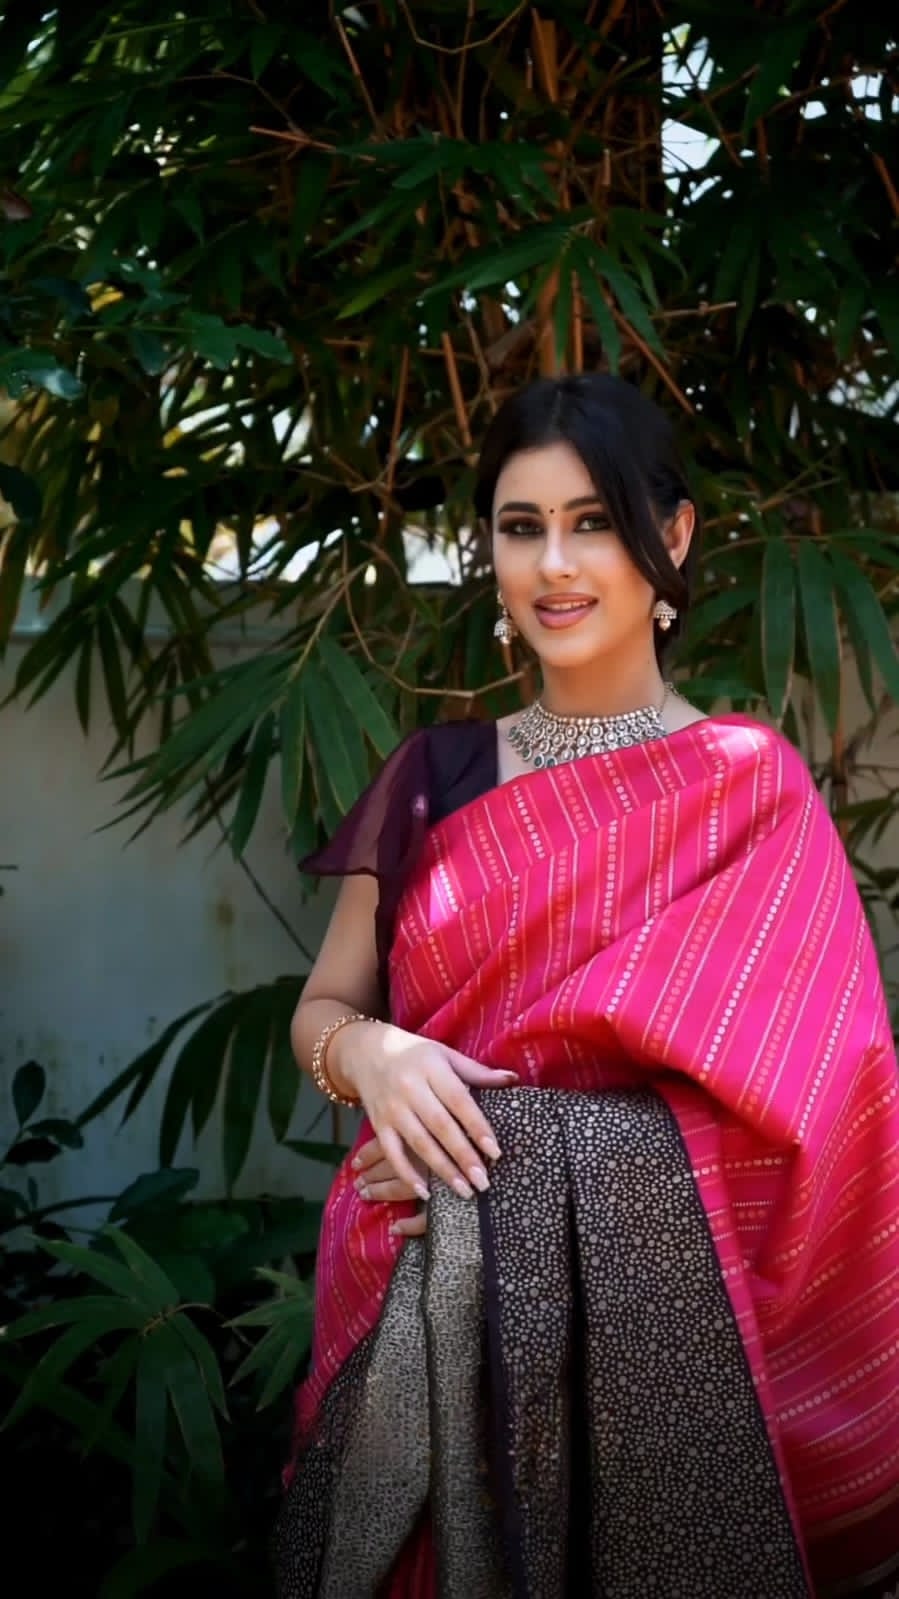 Handloom khadi cotton saree|Black with pink border - Branded sarees